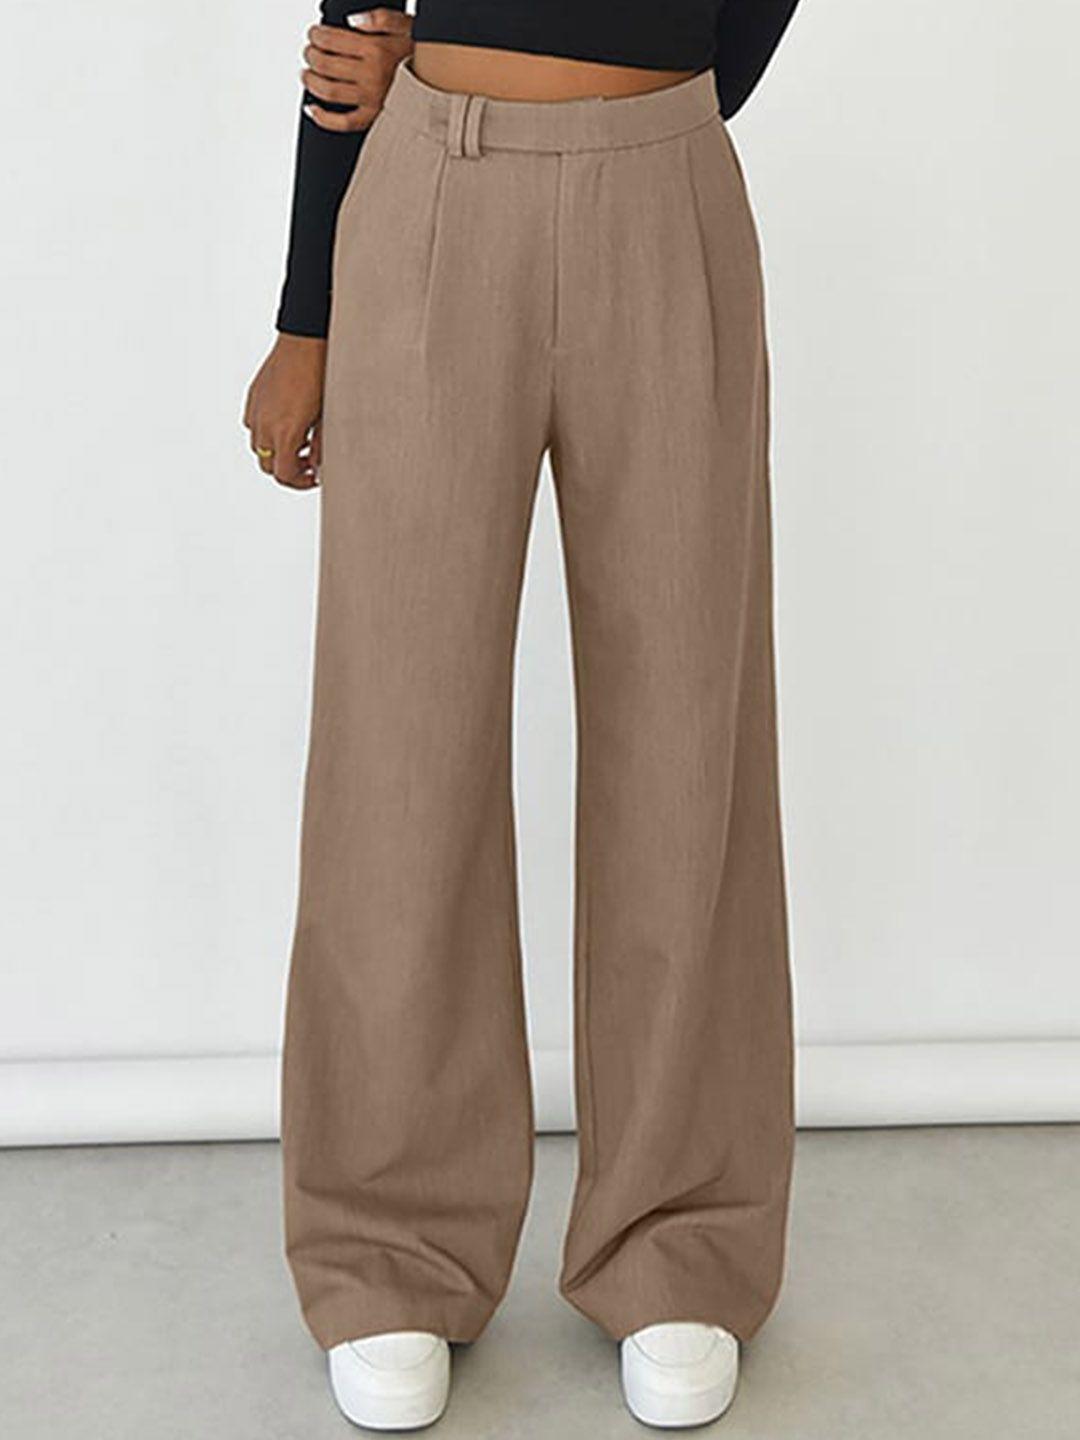 stylecast women khaki trousers